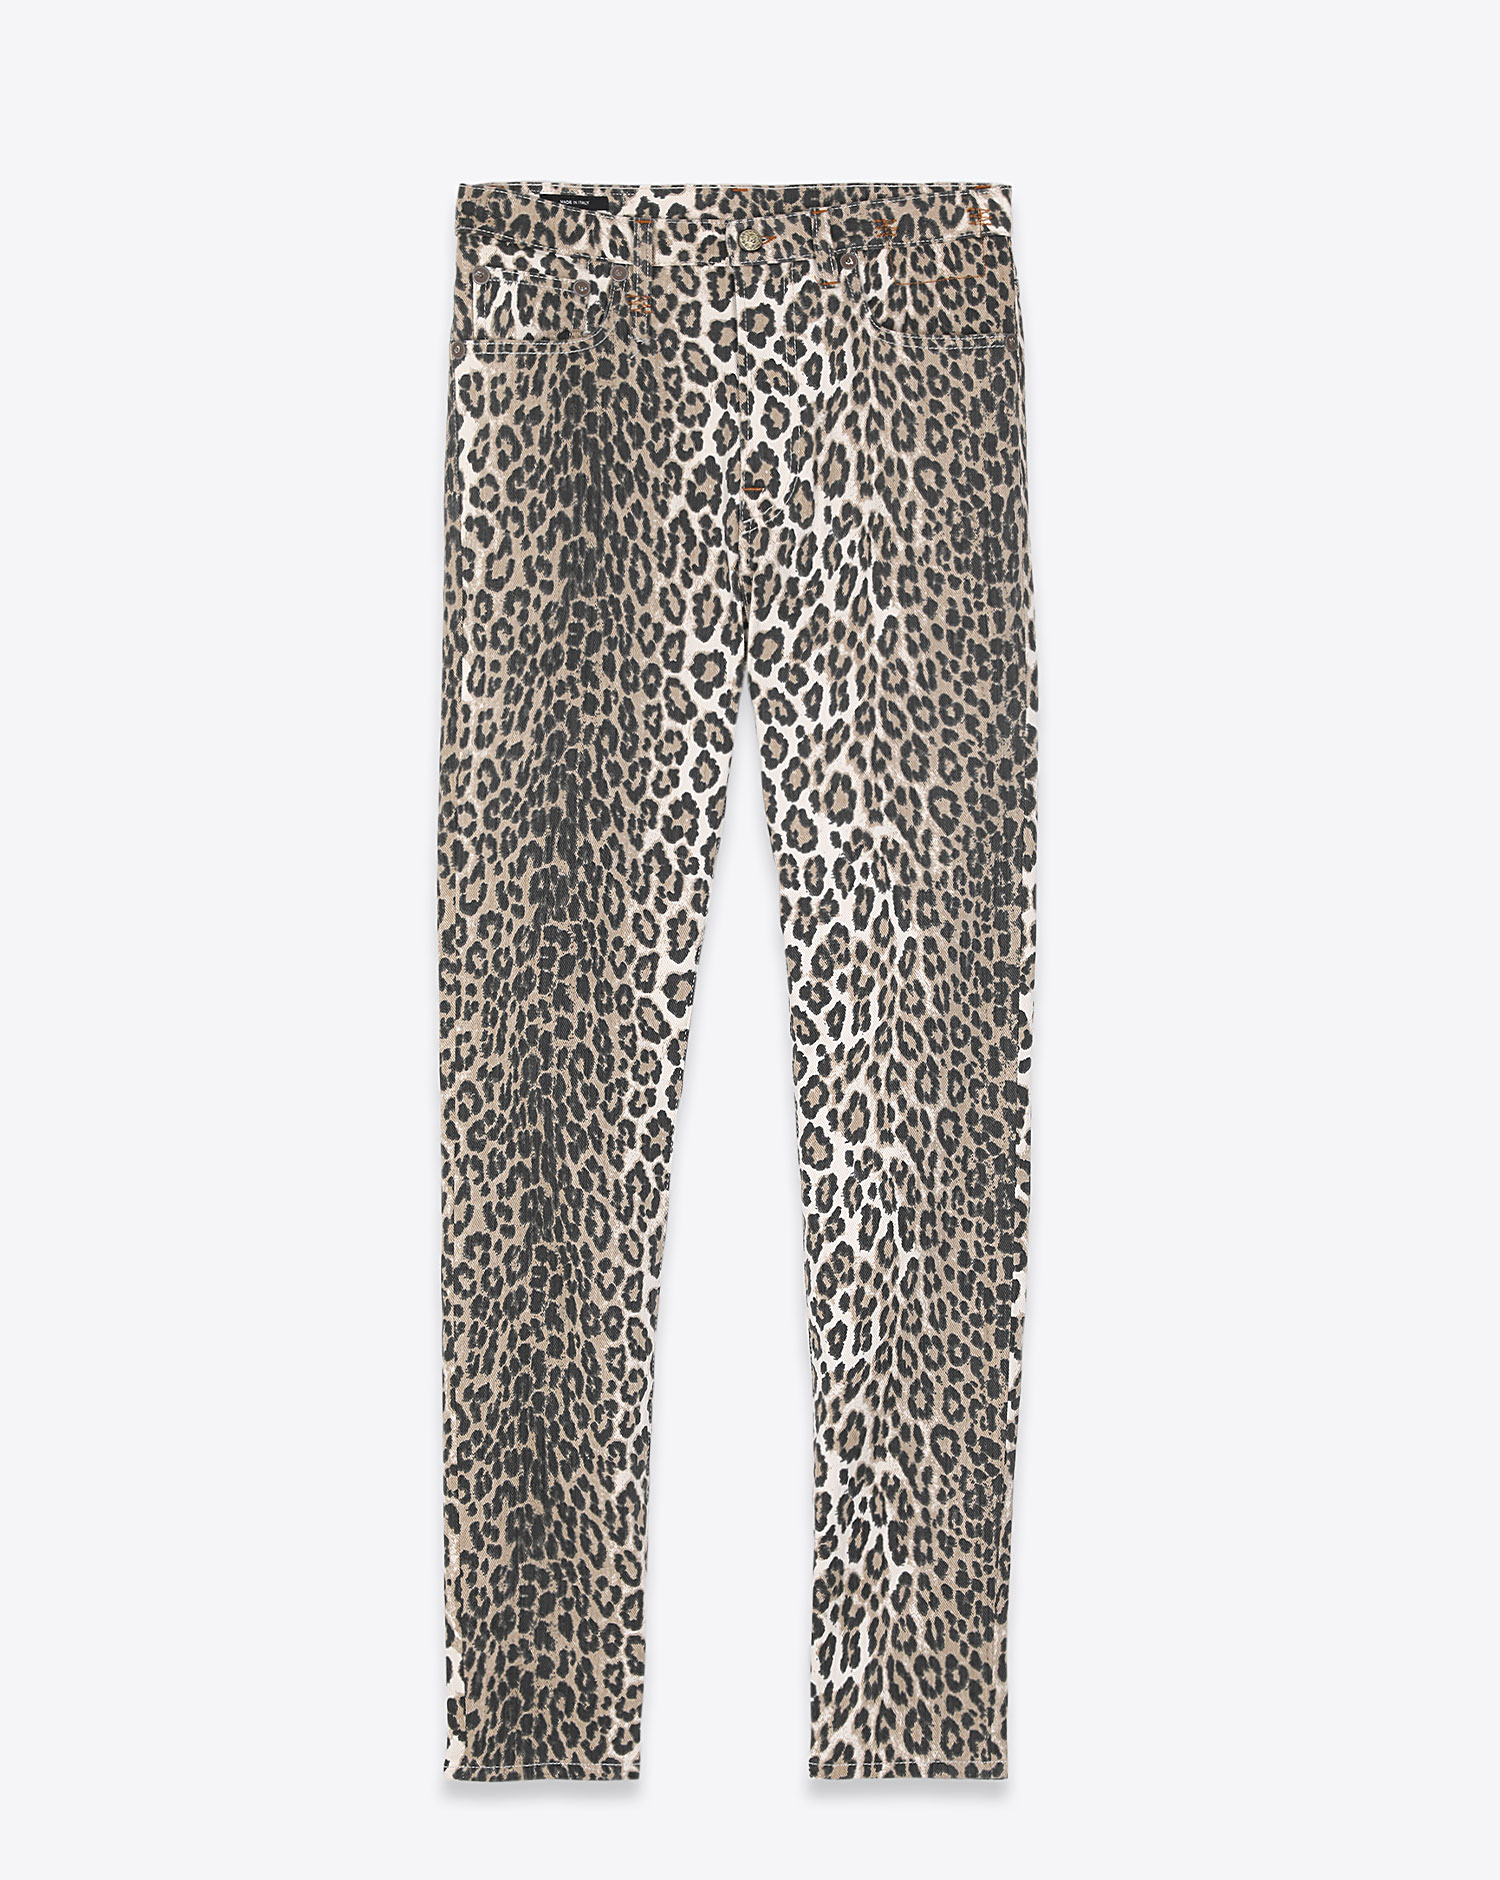 Jeans taille haute High rise léopard R13 Denim